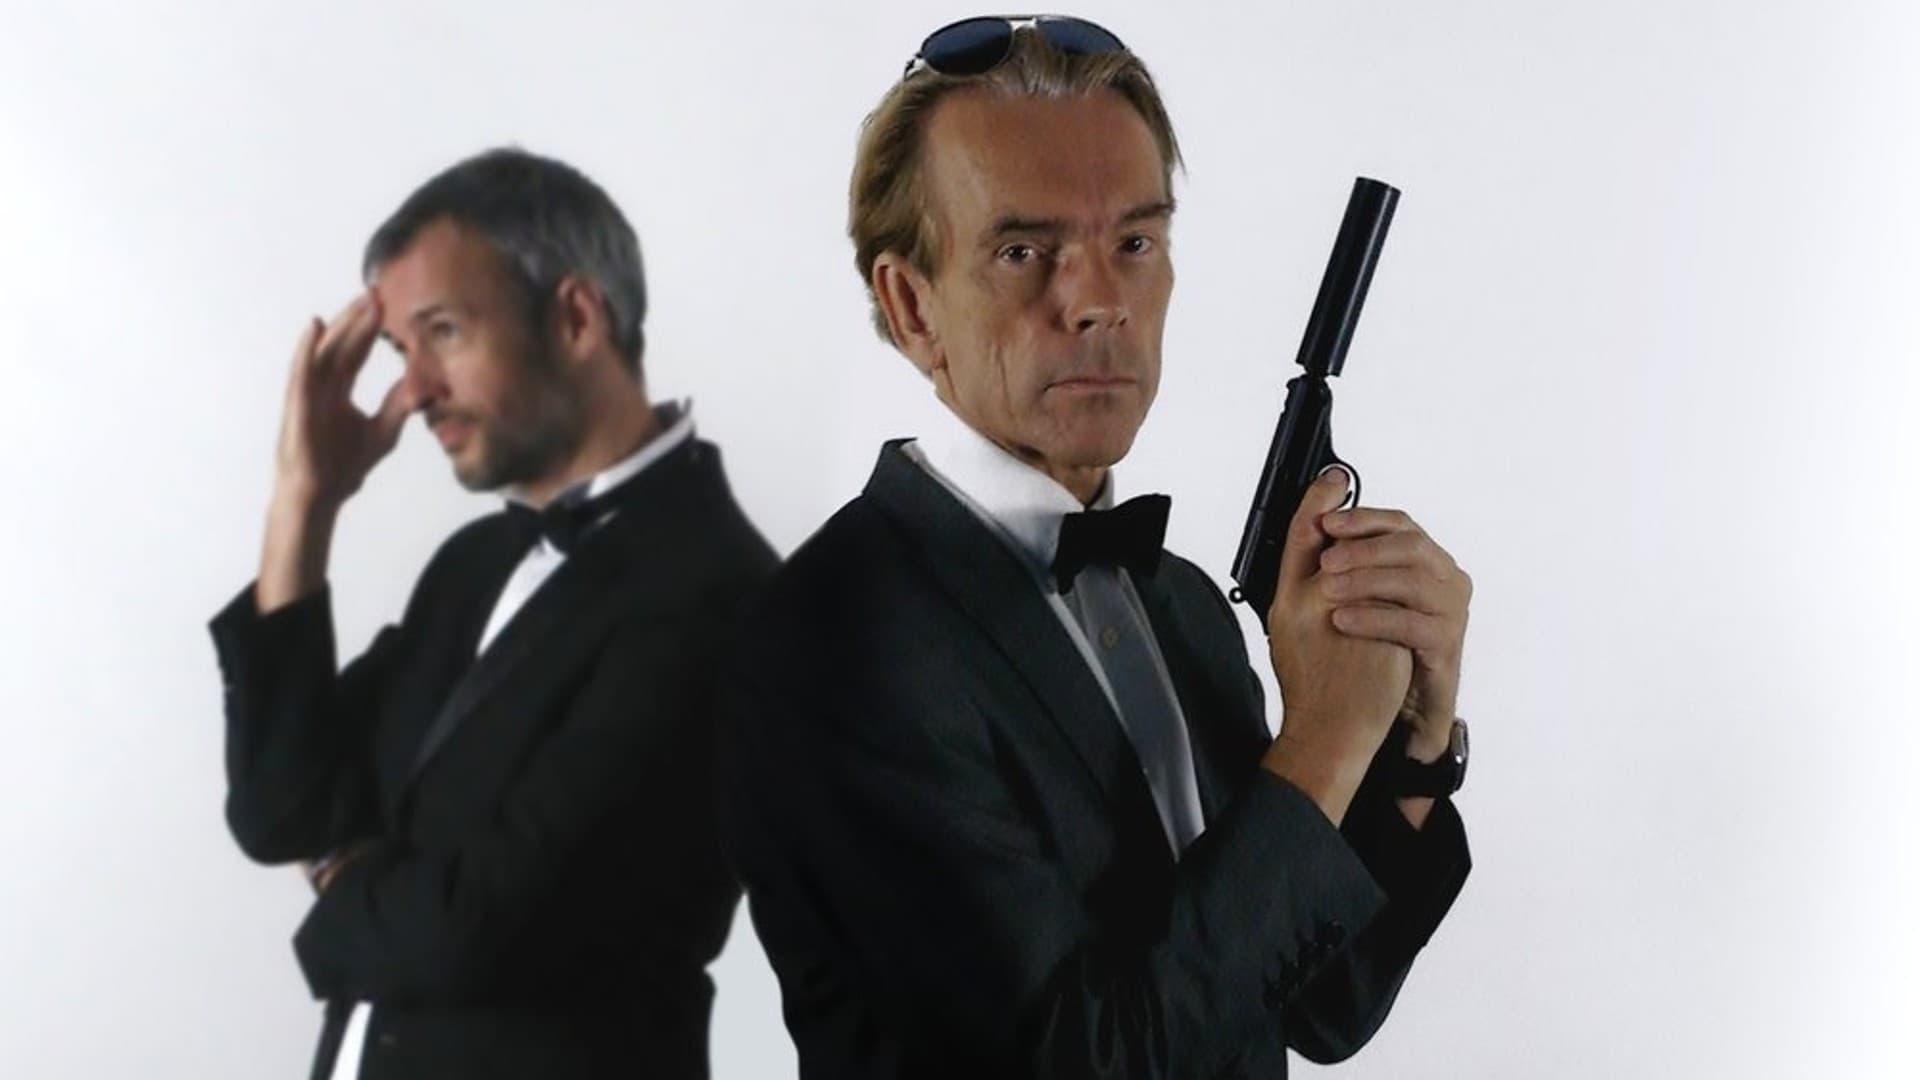 Dr. James Bond backdrop